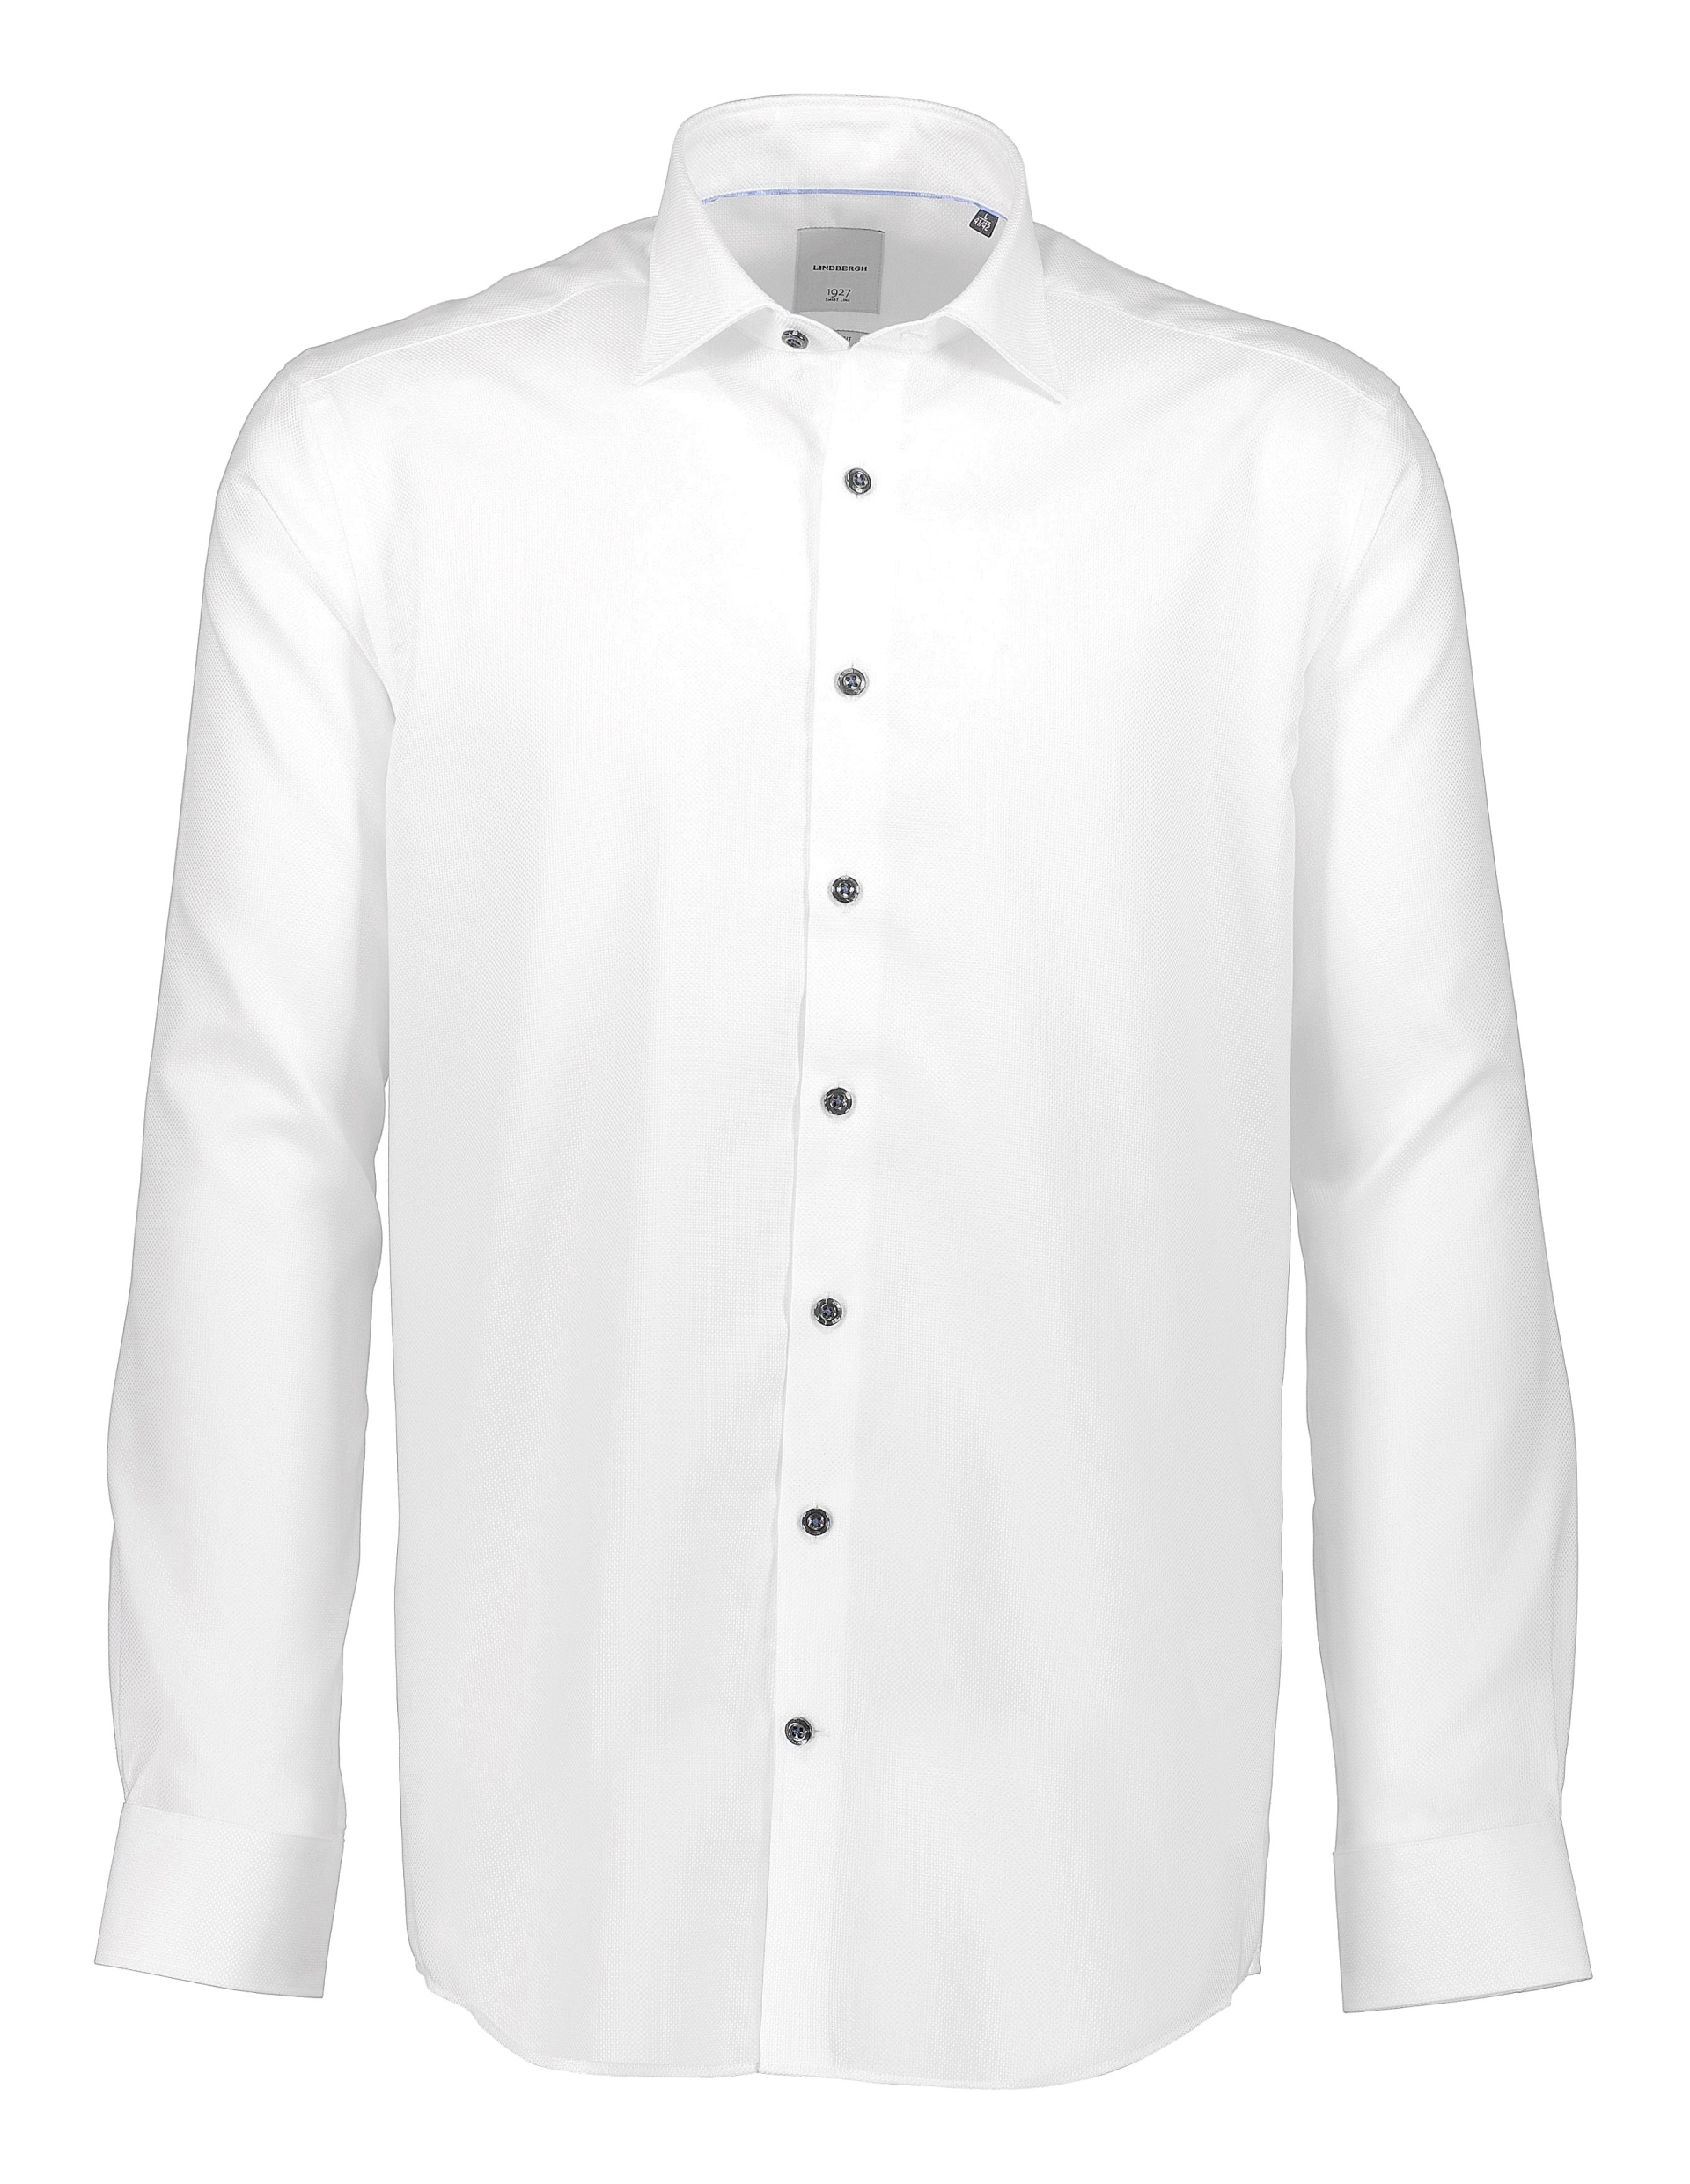 Lindbergh Business casual shirt white / white